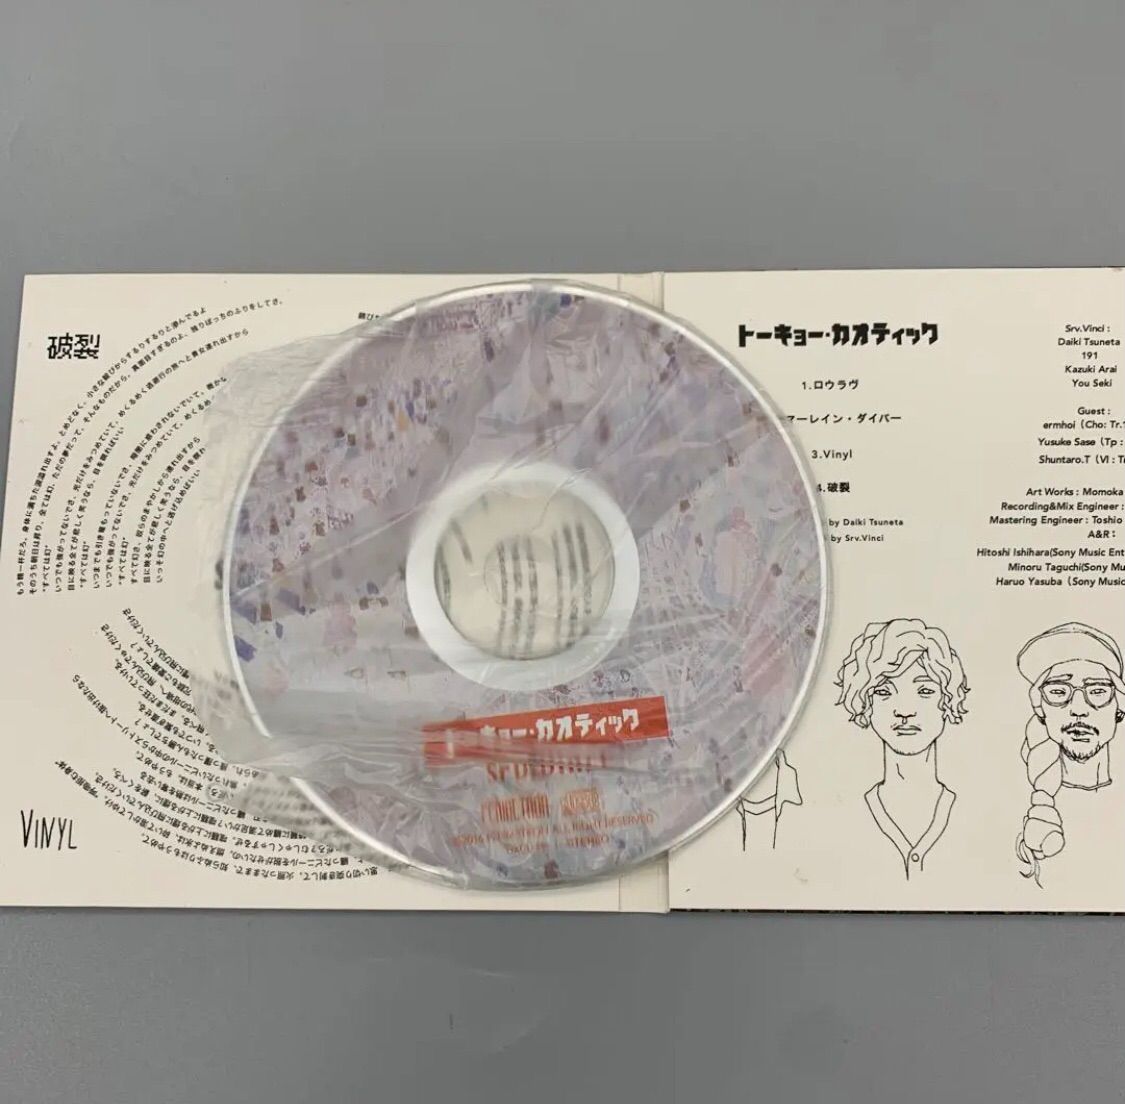 Srv.Vinci トーキョーカオティック CD キングヌー - CD